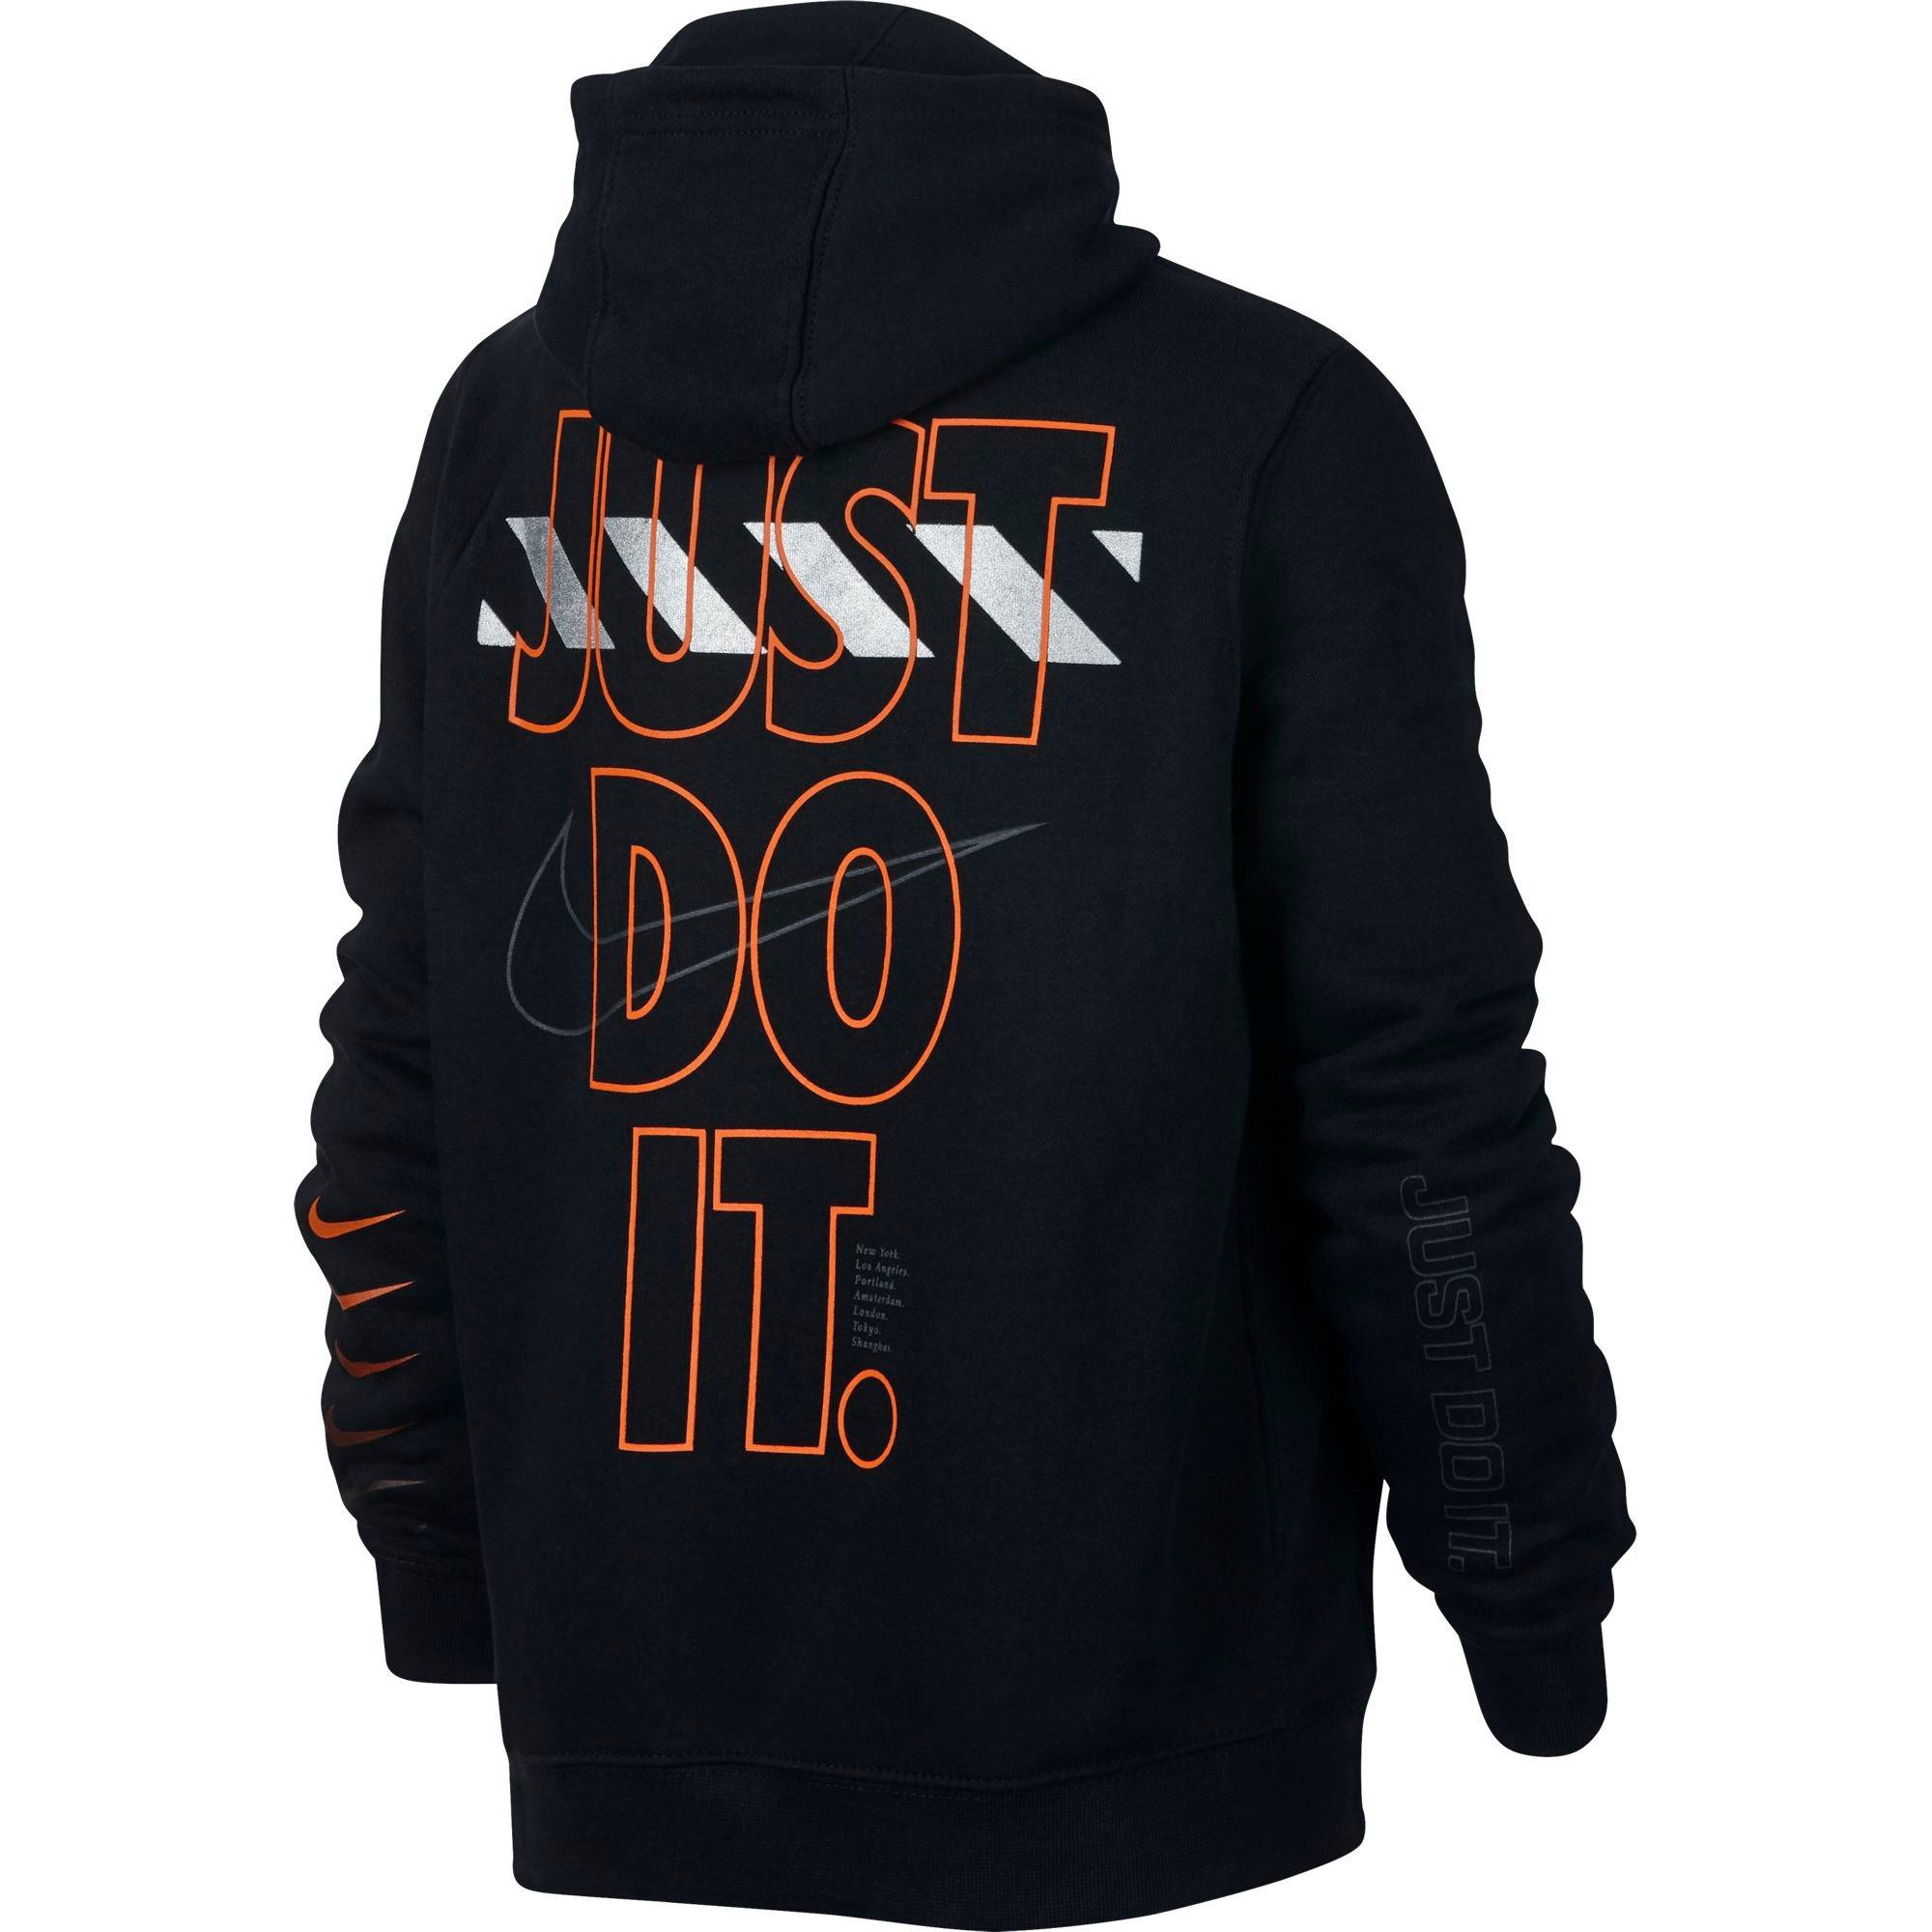 nike just do it hoodie black and orange